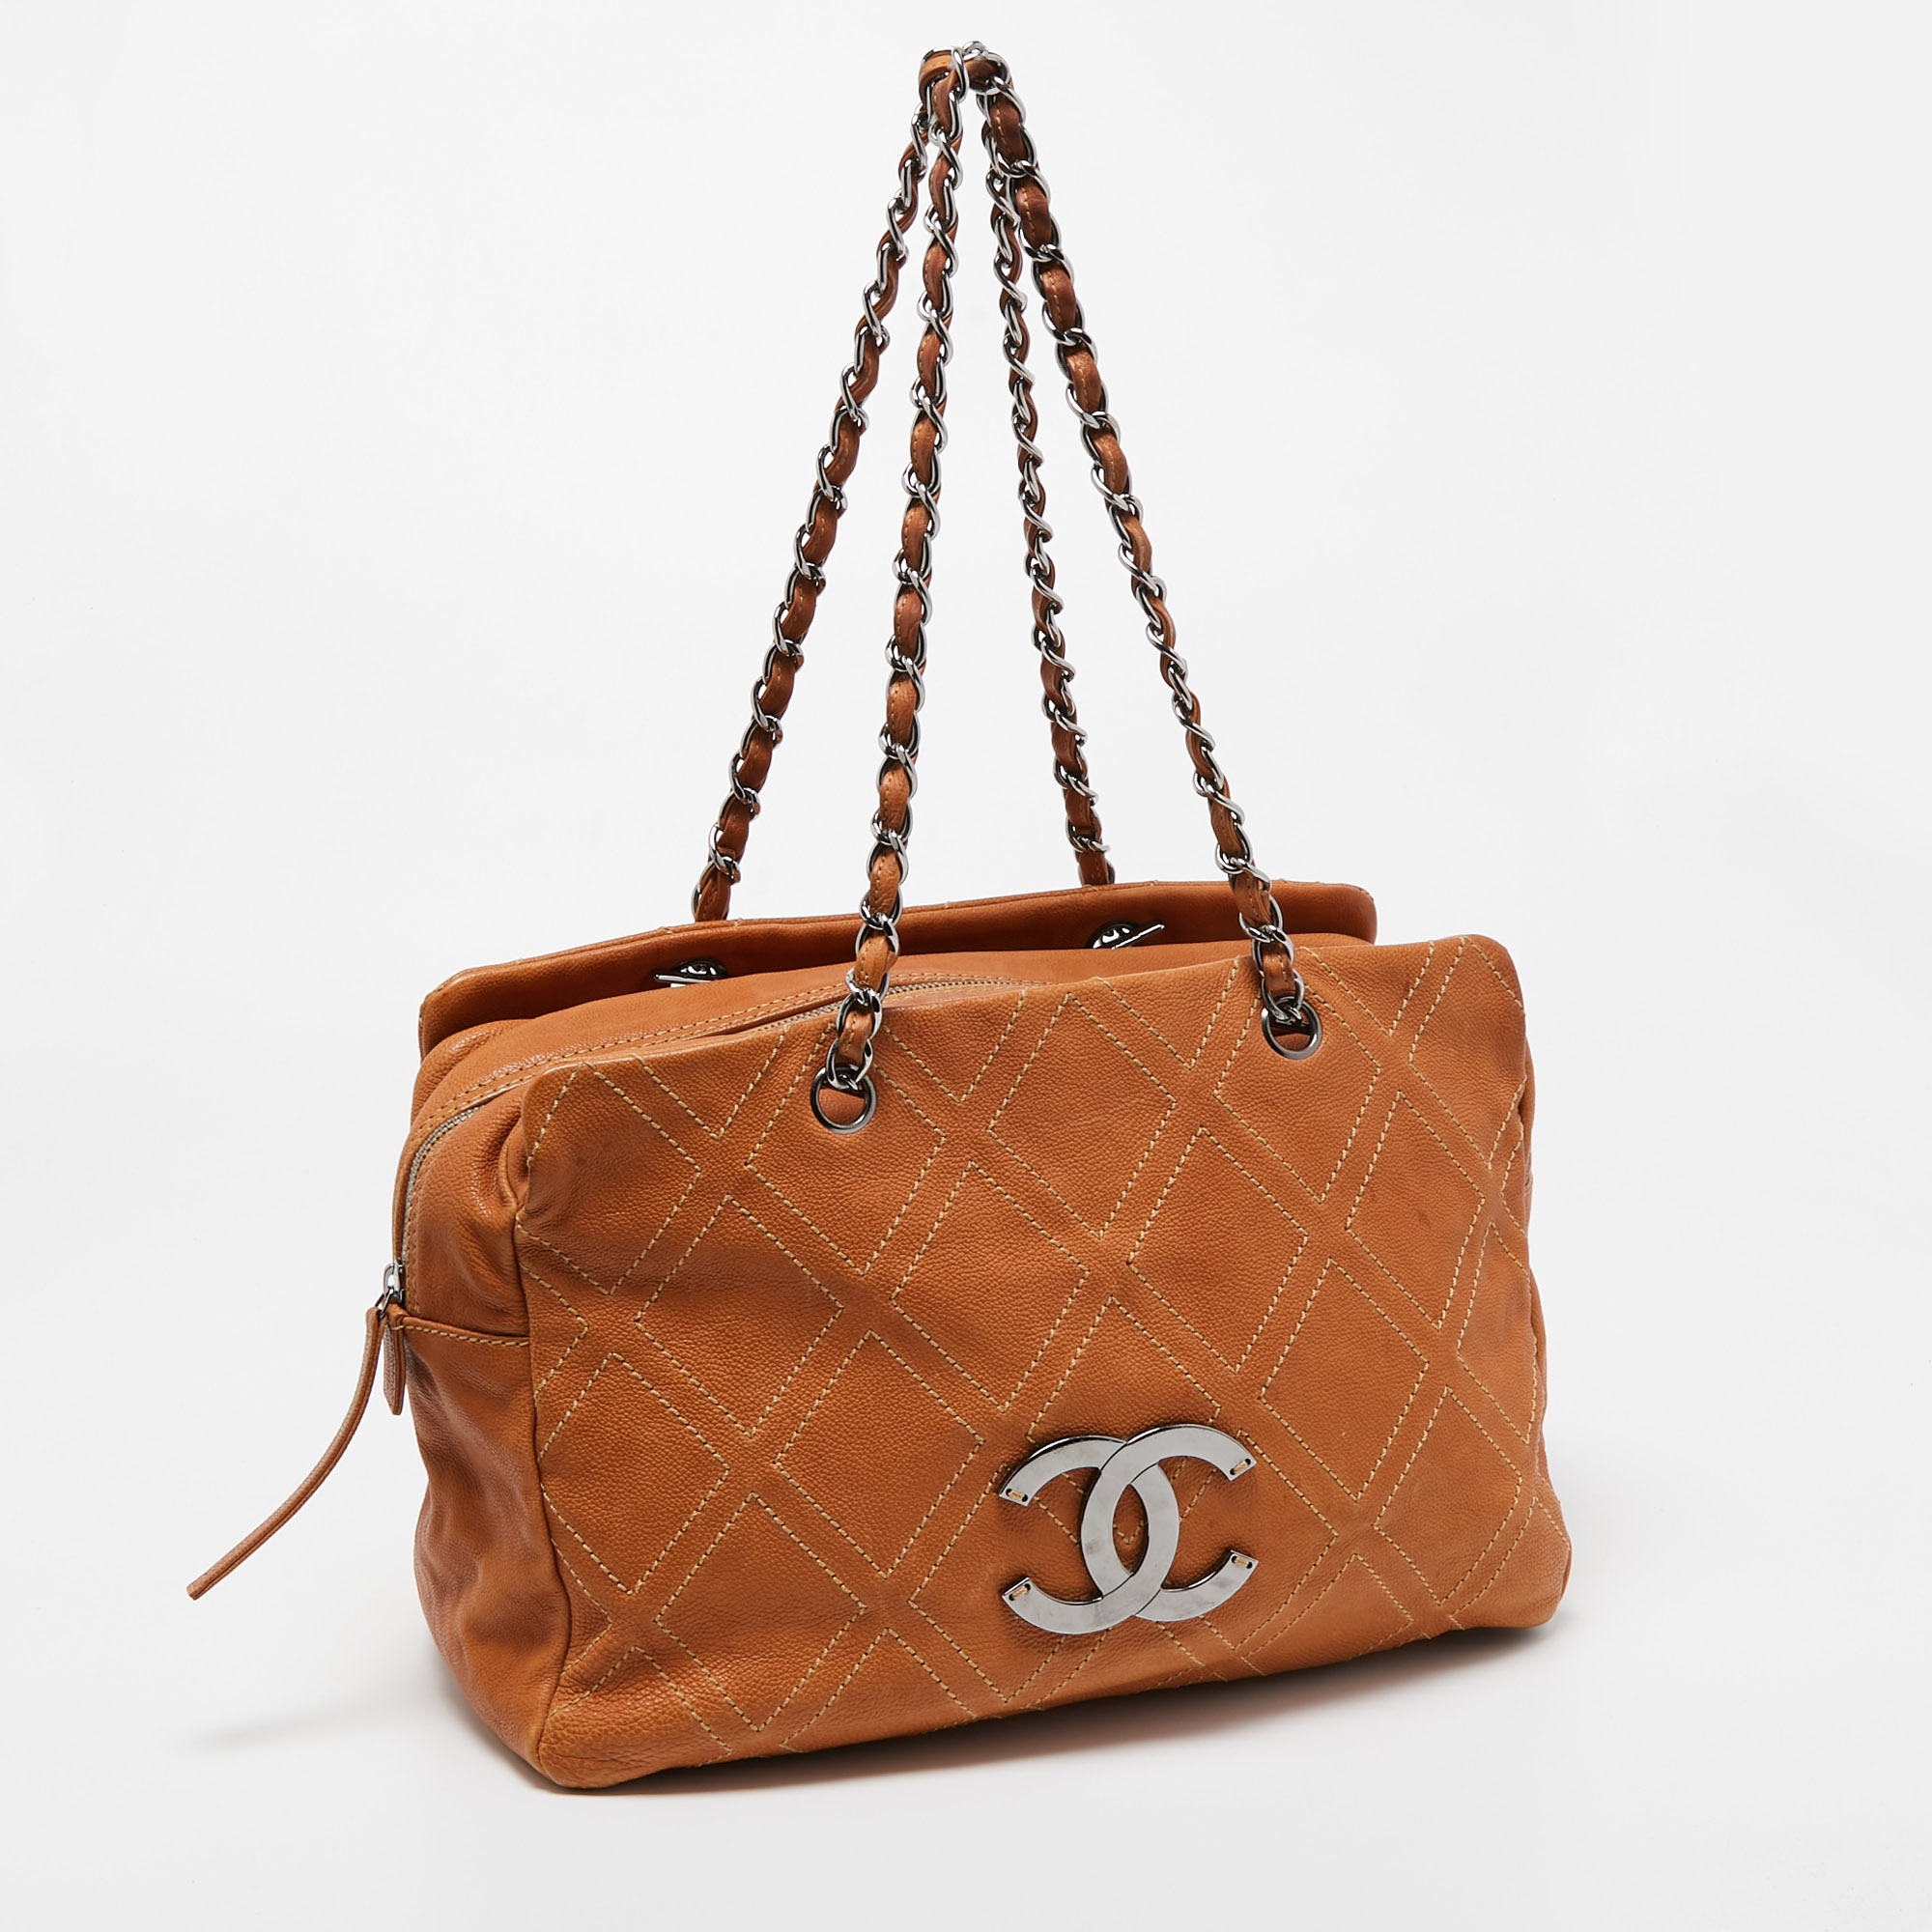 Chanel Tan Leather Triple Compartment Chain Shoulder Bag